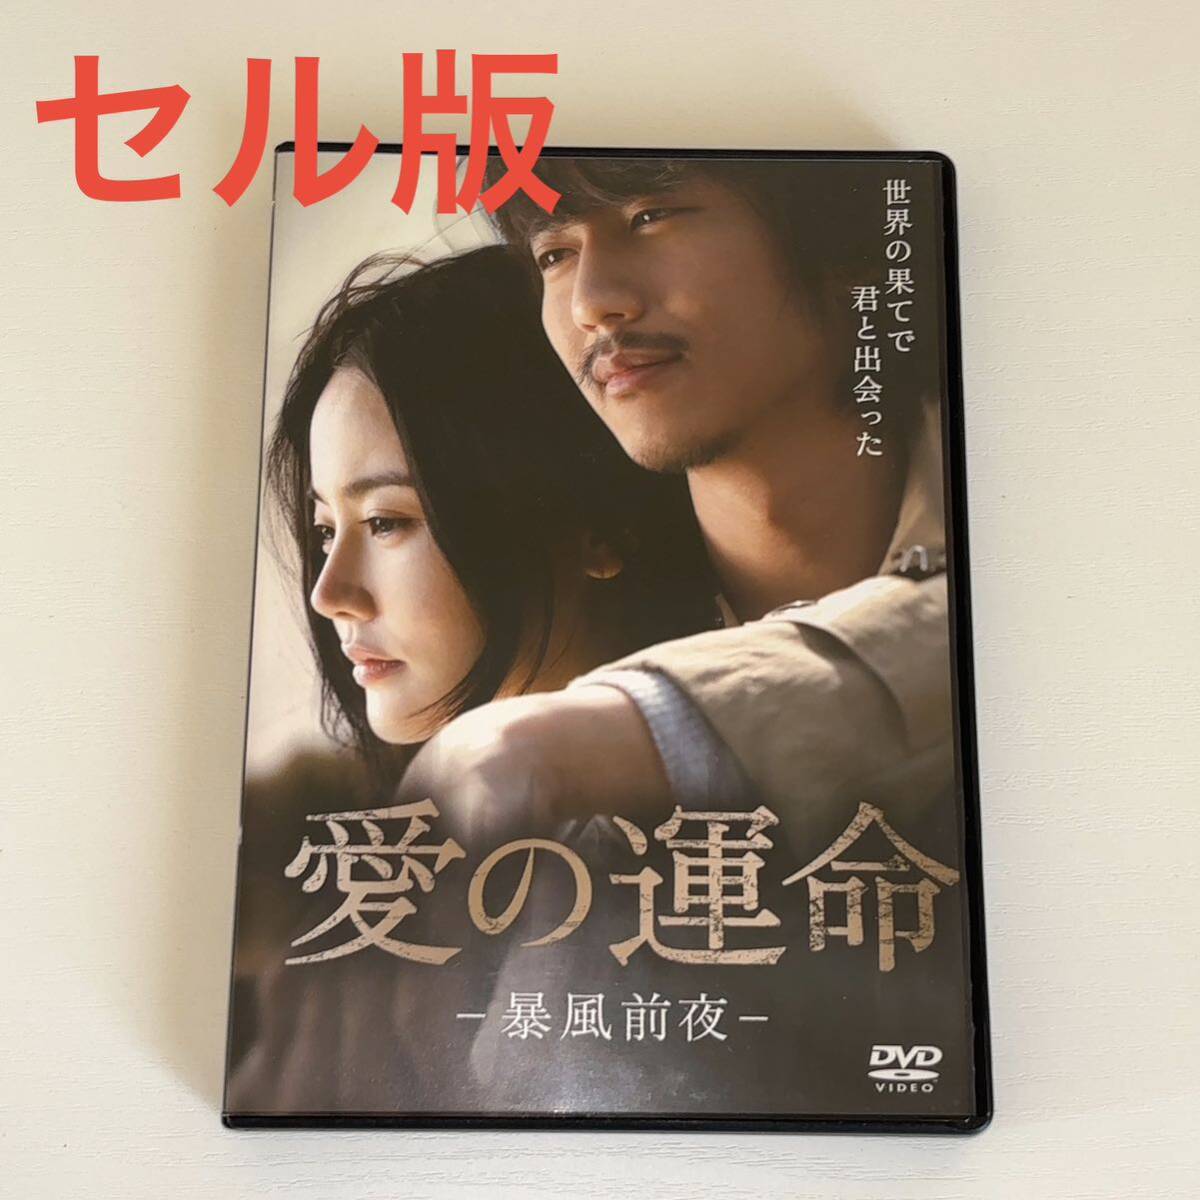 韓国映画『愛の運命-暴風前夜-』('10韓国) 国内セル版